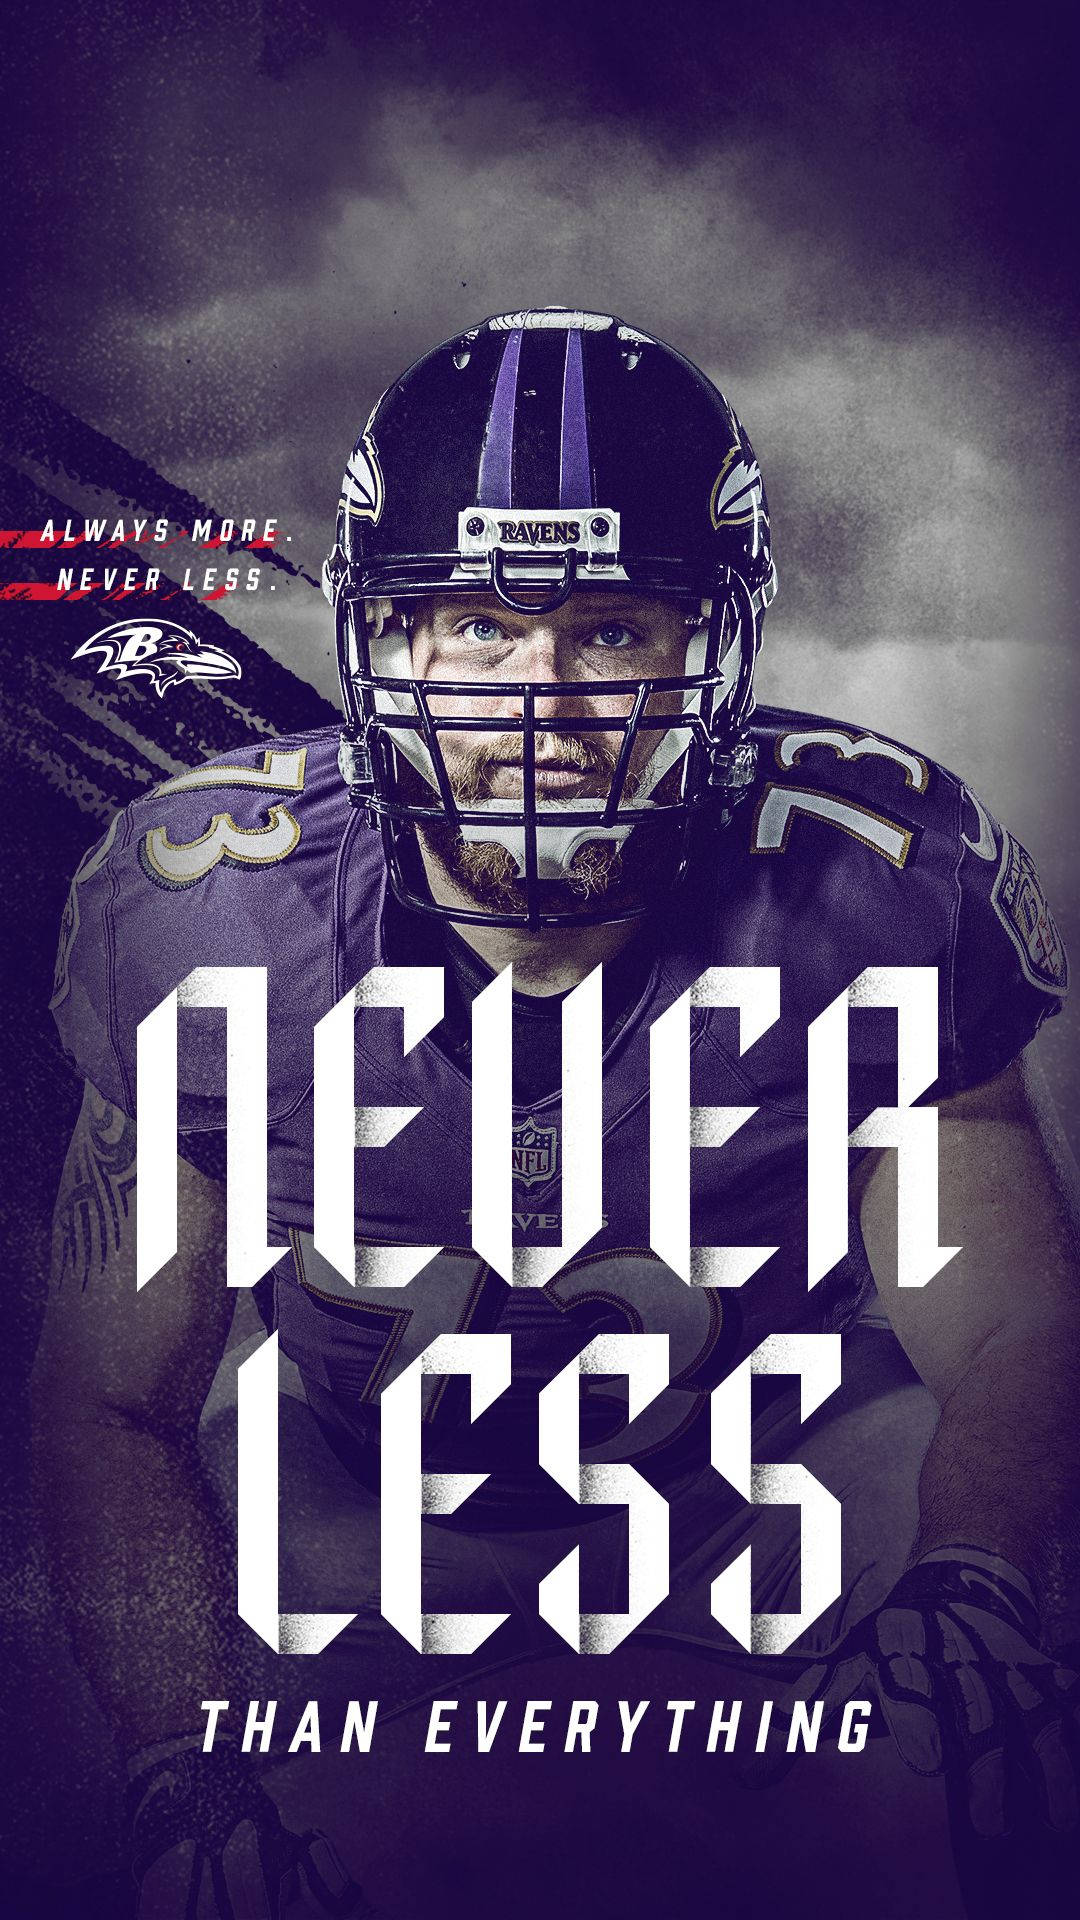 Baltimore Ravens Marshal Yanda Poster Background